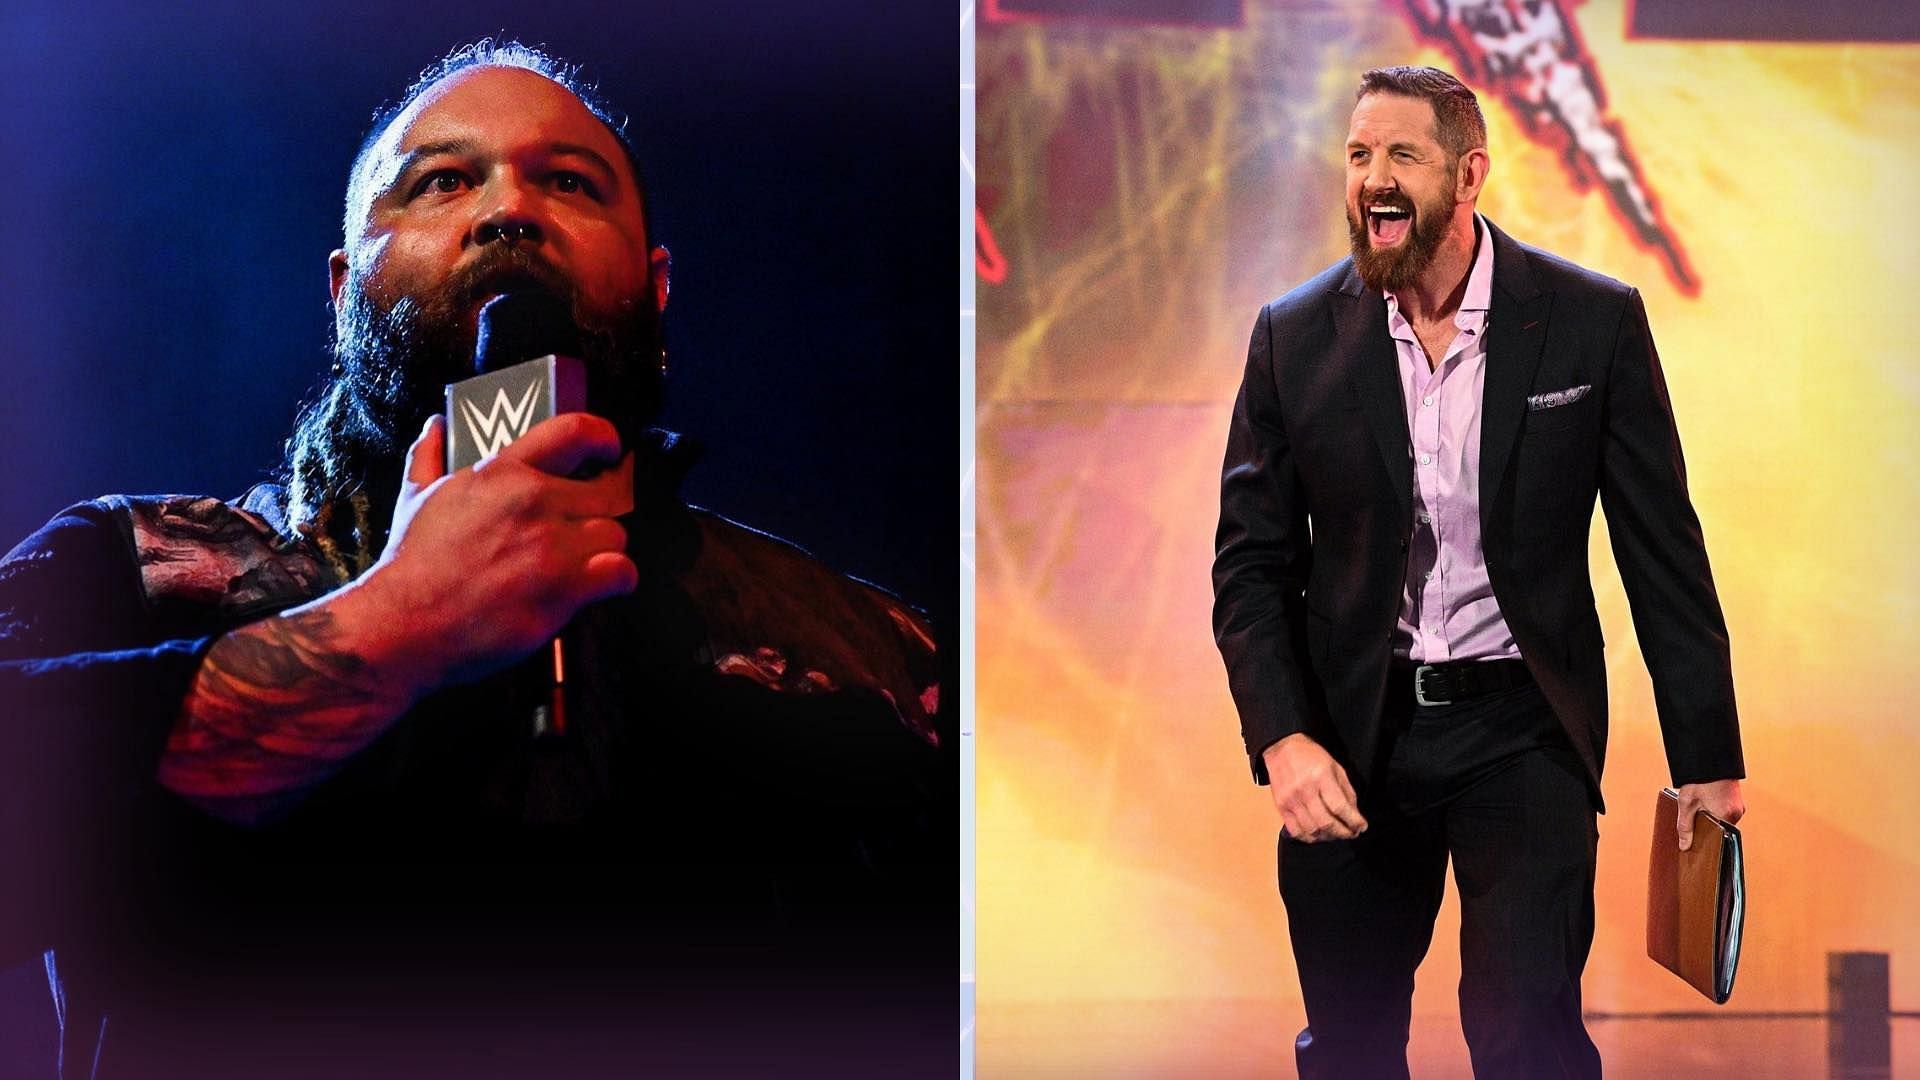 WWE Superstars Bray Wyatt and Wade Barrett